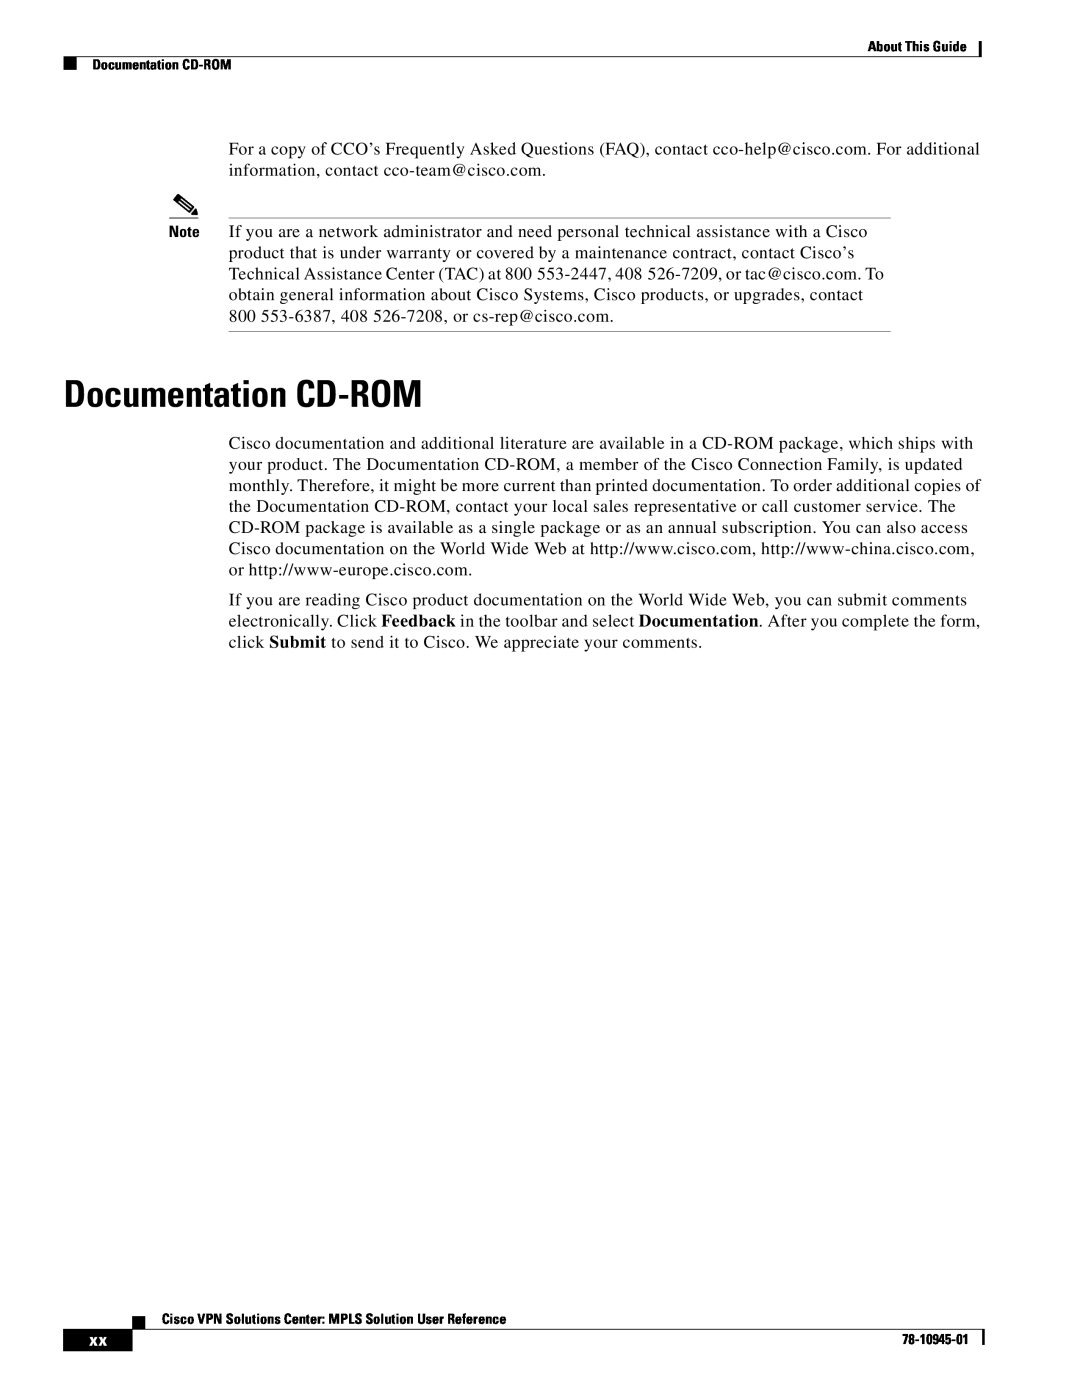 Cisco Systems 78-10945-01 manual Documentation CD-ROM 